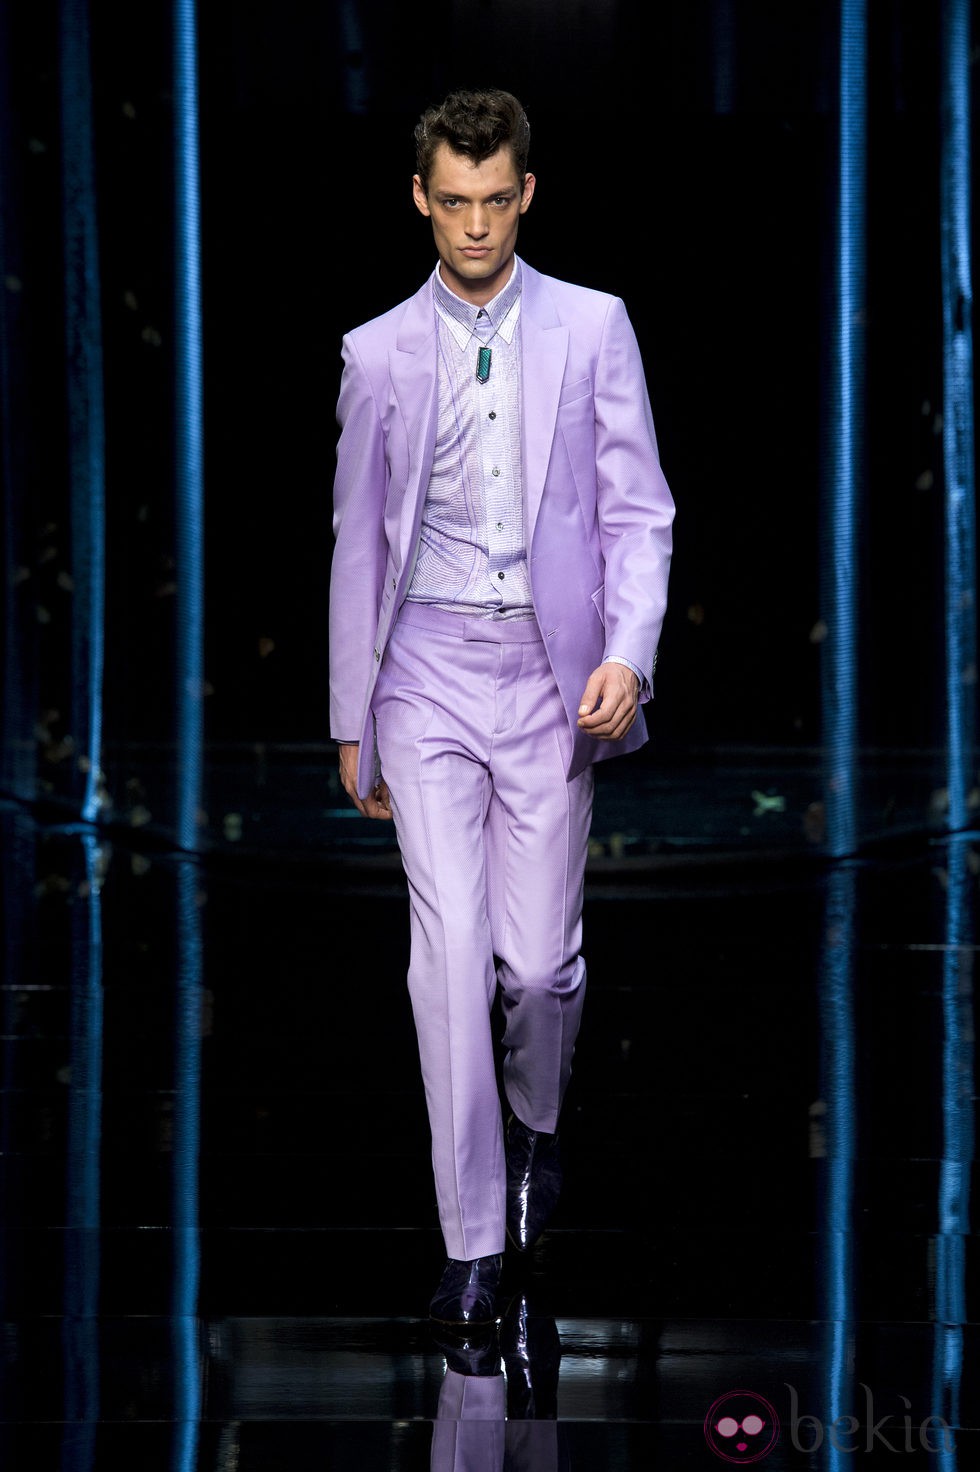 Traje color violeta de Roberto cavalli en la Semana de la Moda masculina de Milán